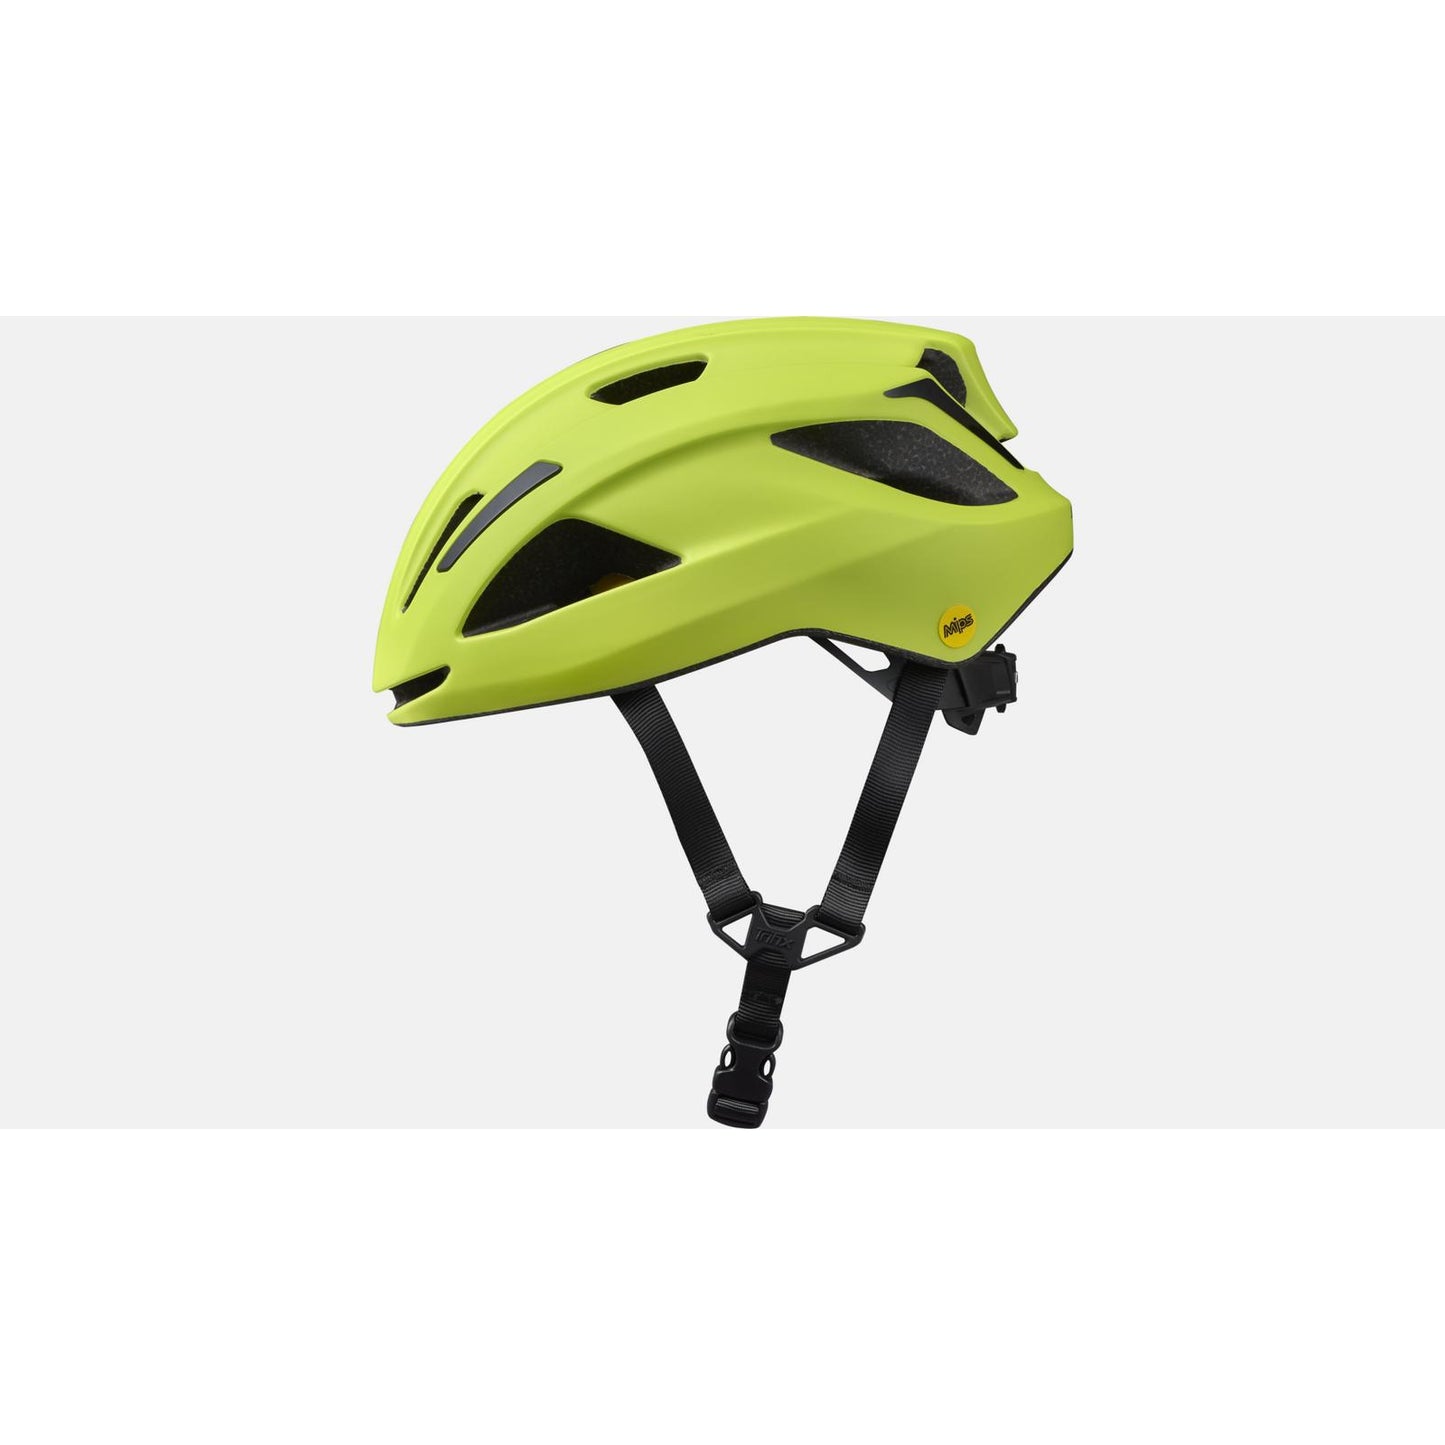 Specialized Align II Bike Helmet - Helmets - Bicycle Warehouse